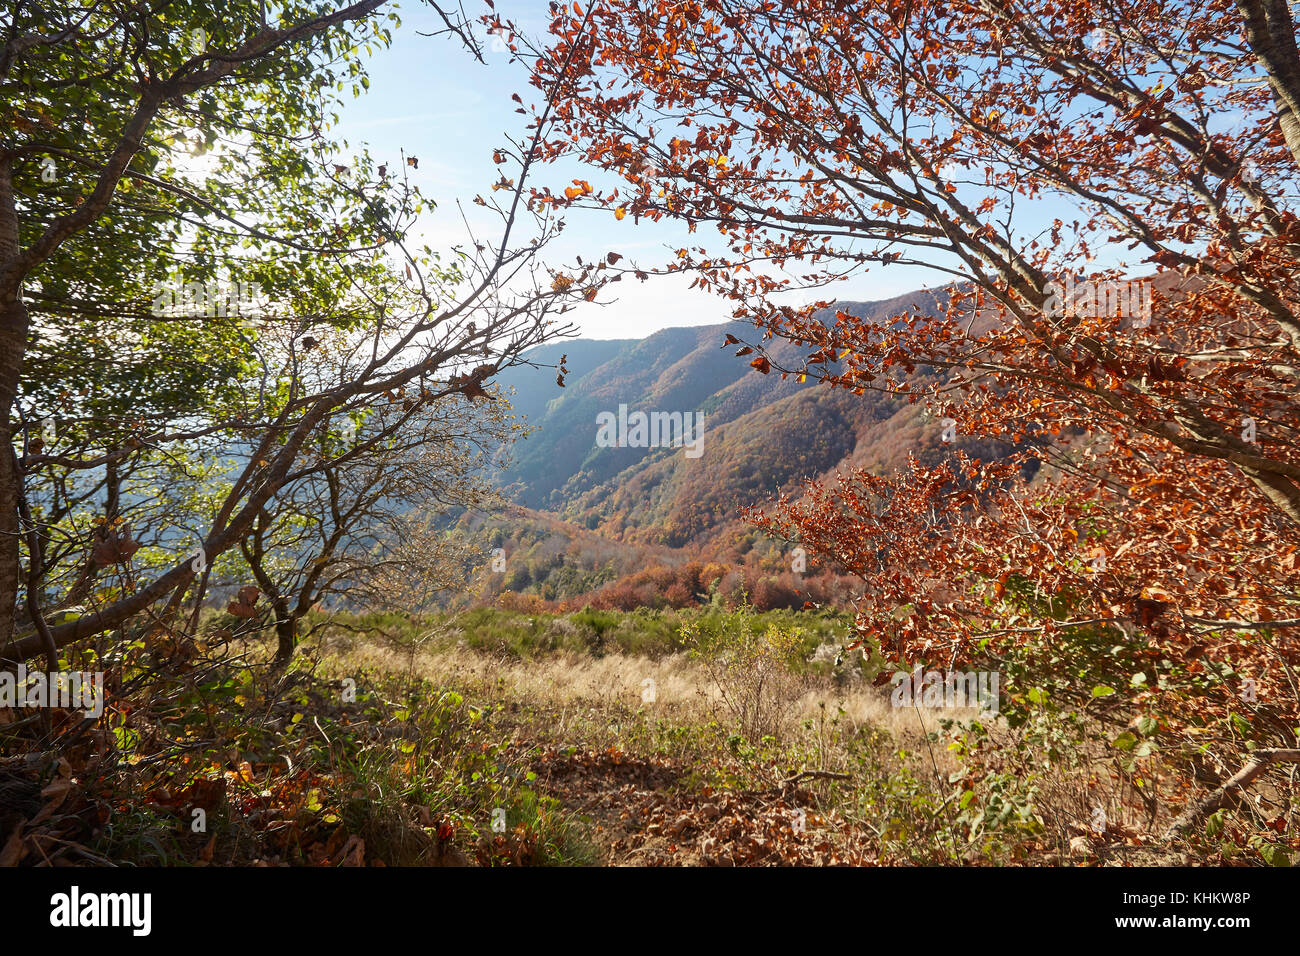 Brightly coloured autumn Beech trees, Fagus sylvatica, in 'Foresta di Sant'antonio', mountains of Pratomagno, Valdarno, Italy. Stock Photo